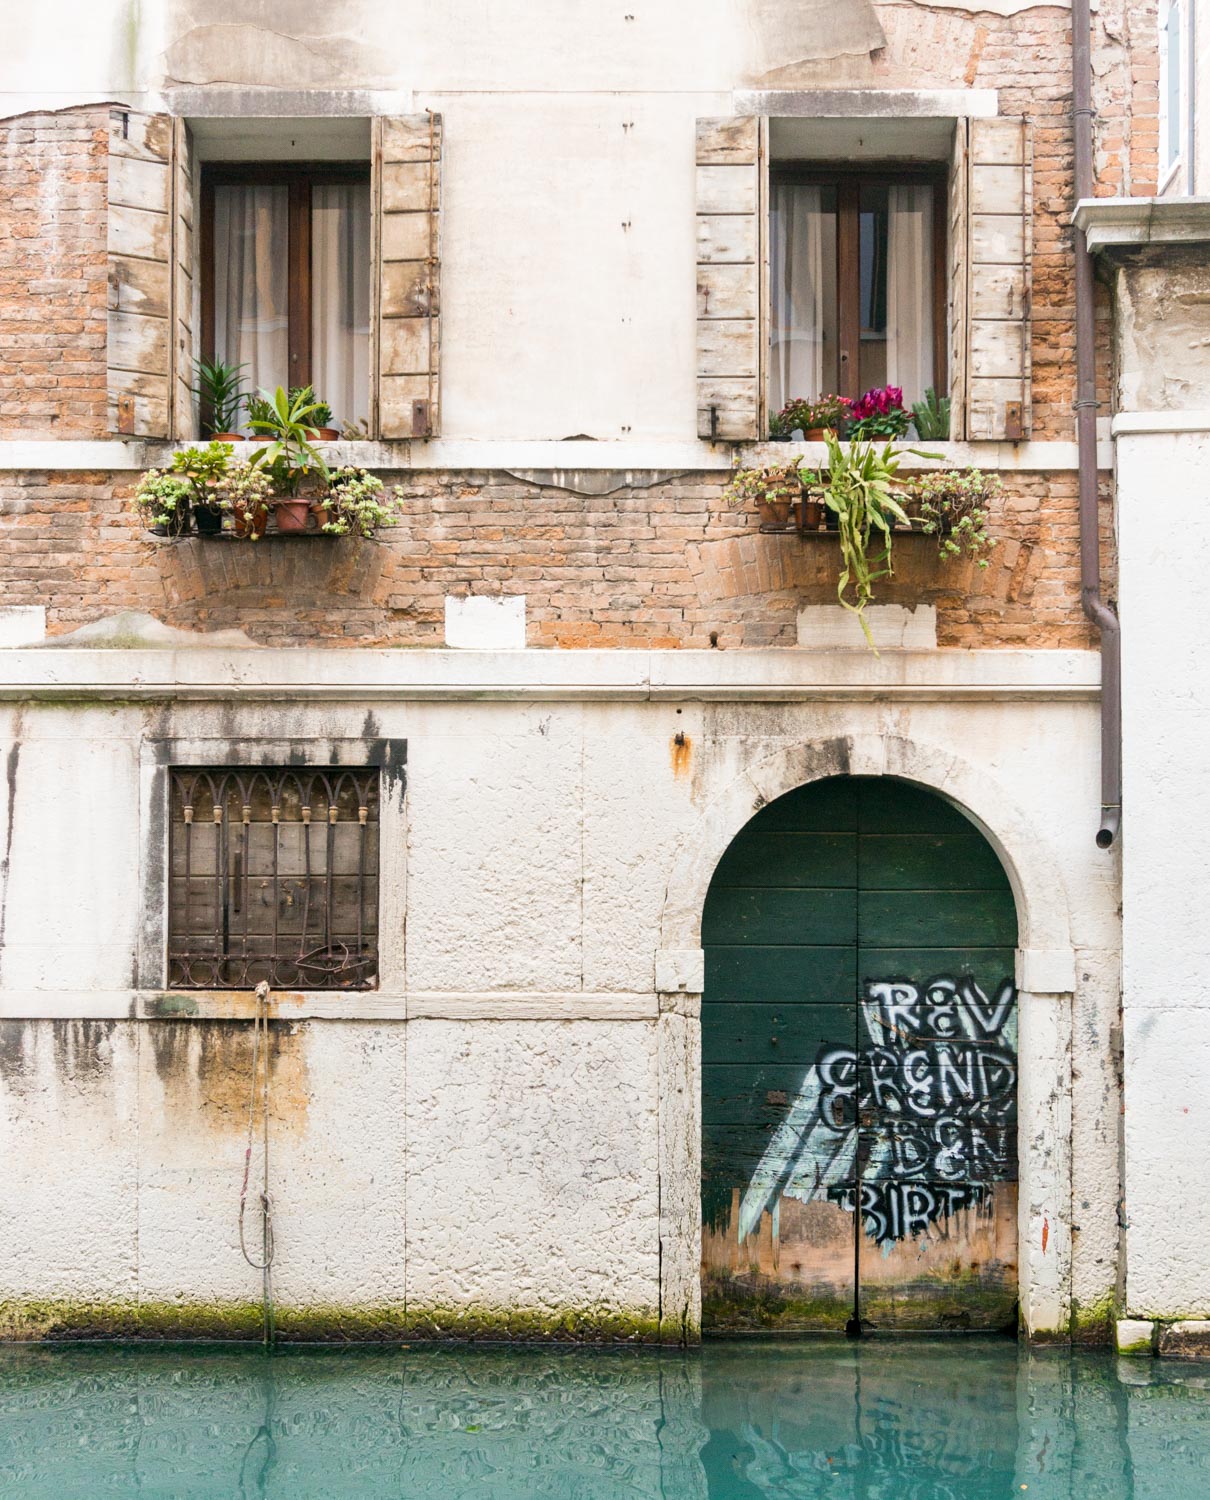 Sunday in Venice – Doors and last looks